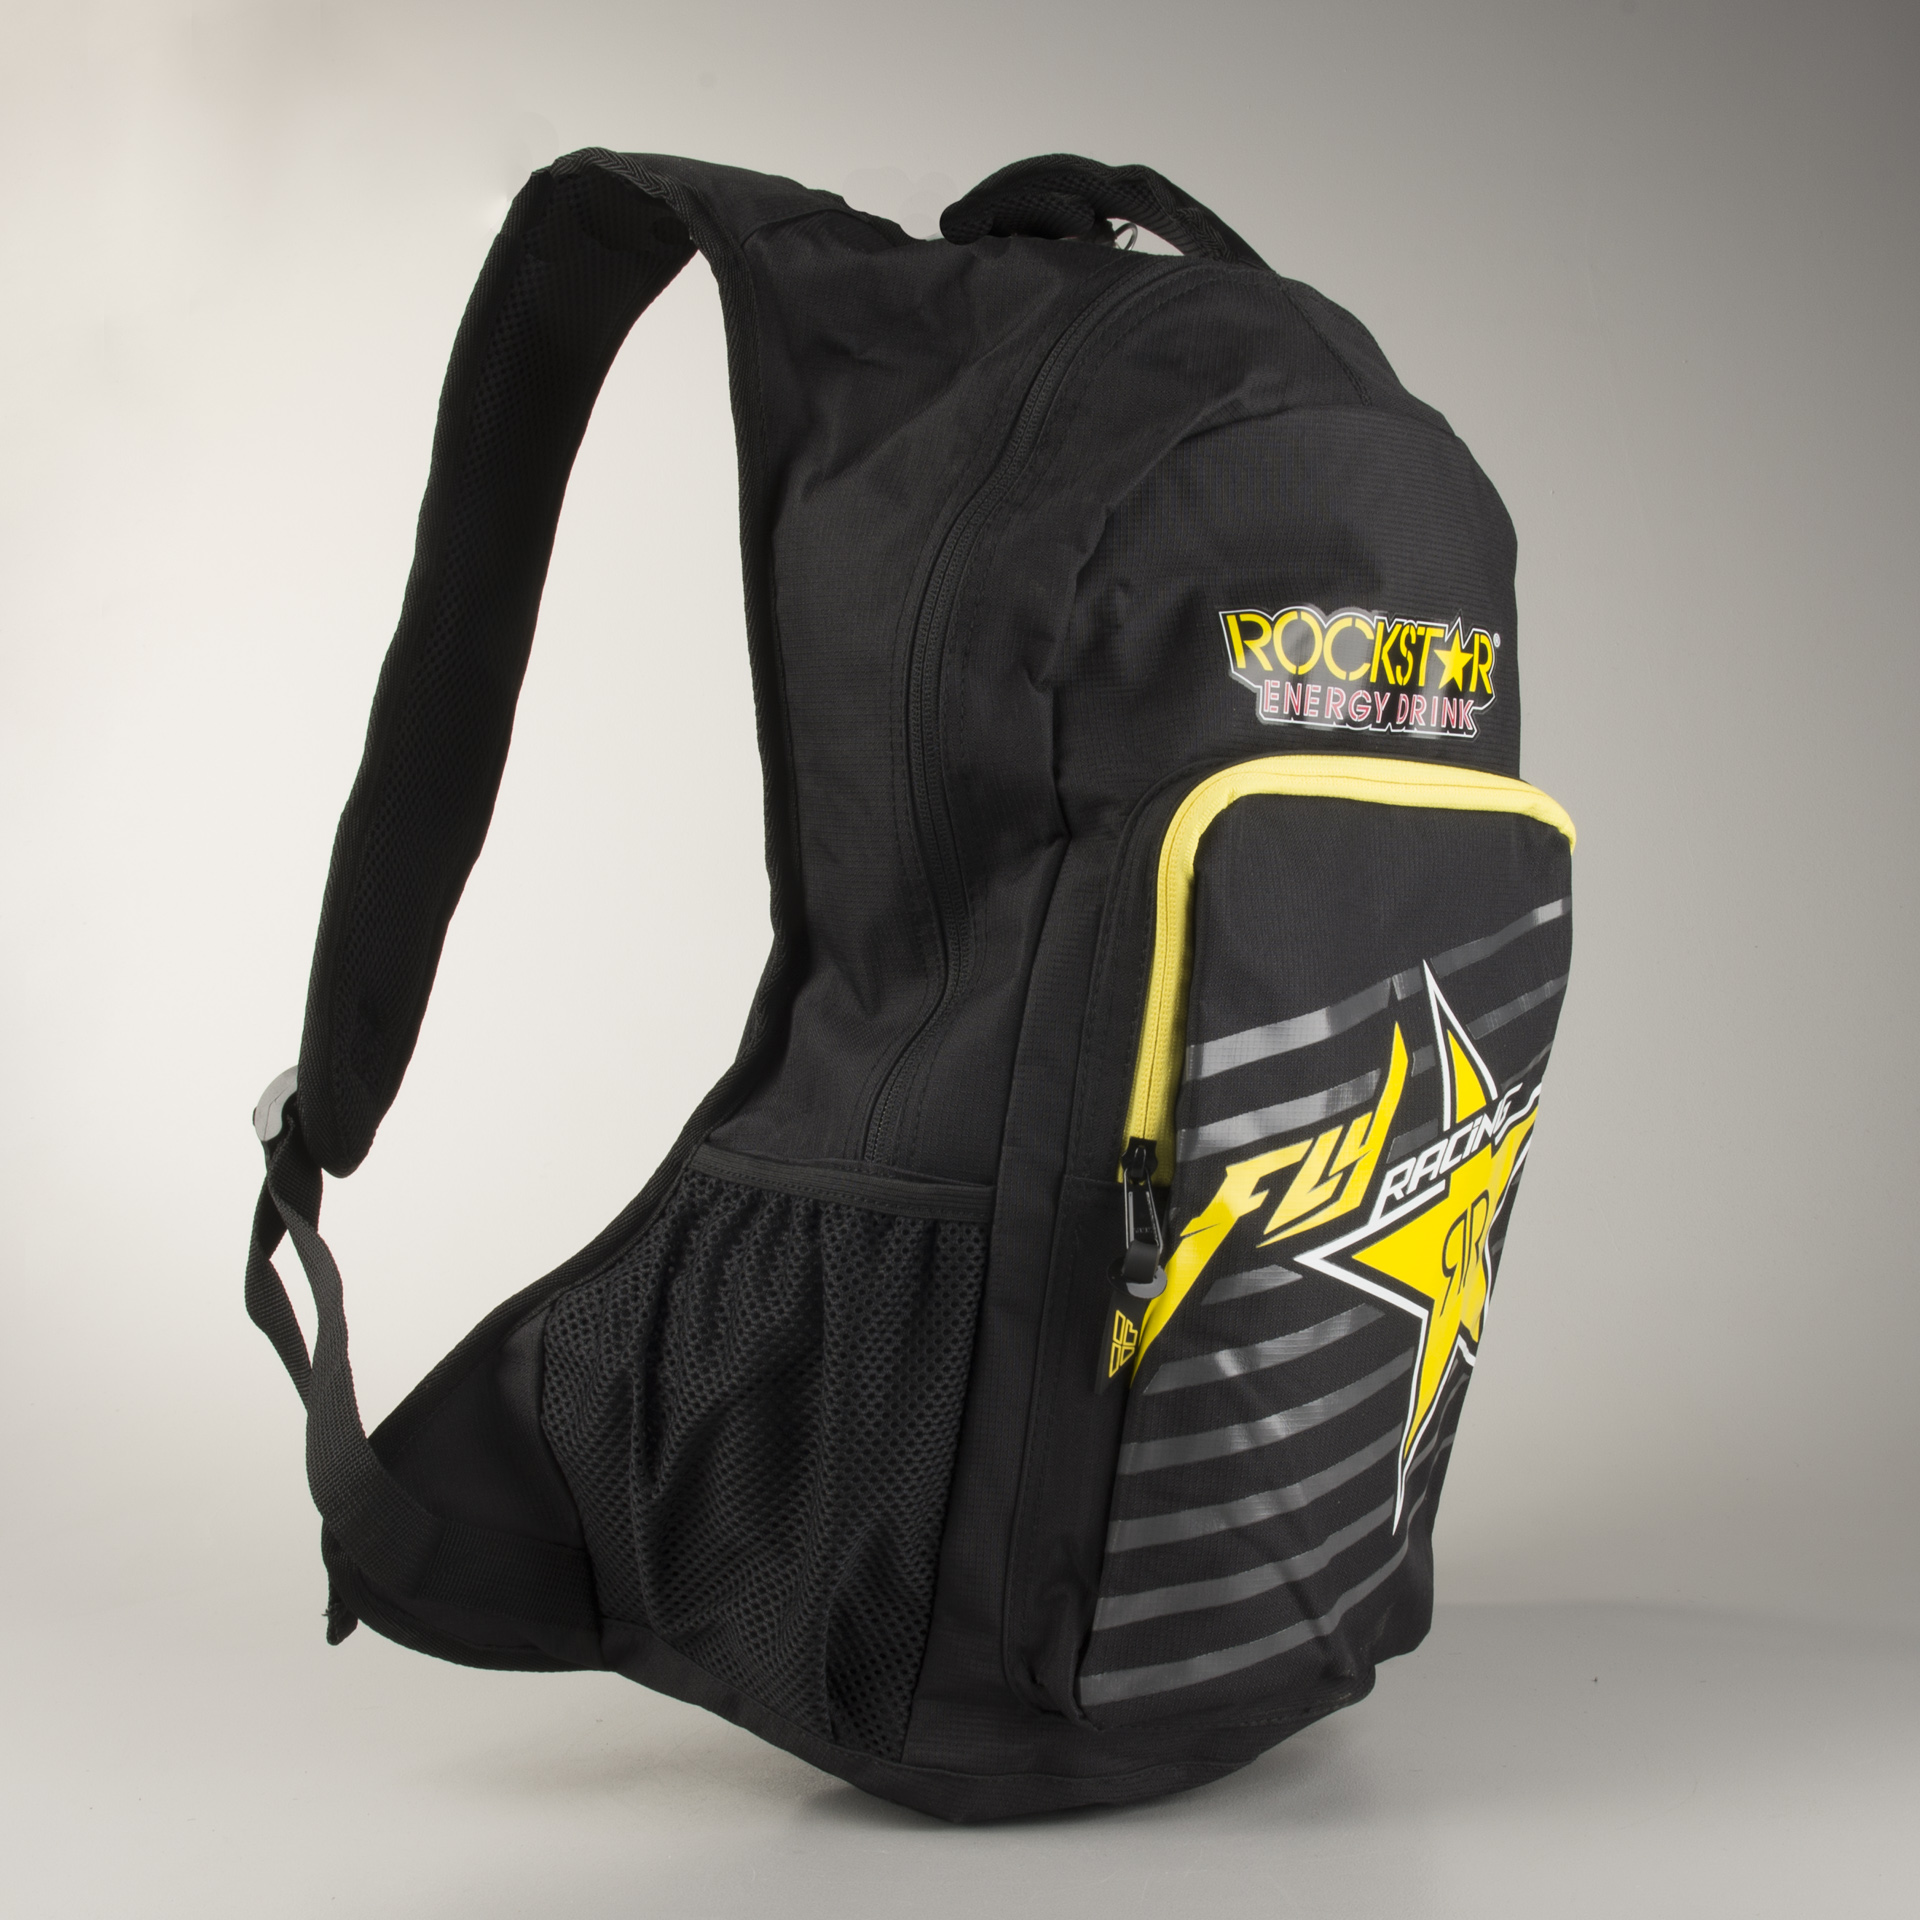 FLY ROCKSTAR Jump Pack Rucksack/Backpack Black/Yellow Motocross MX Enduro Bag